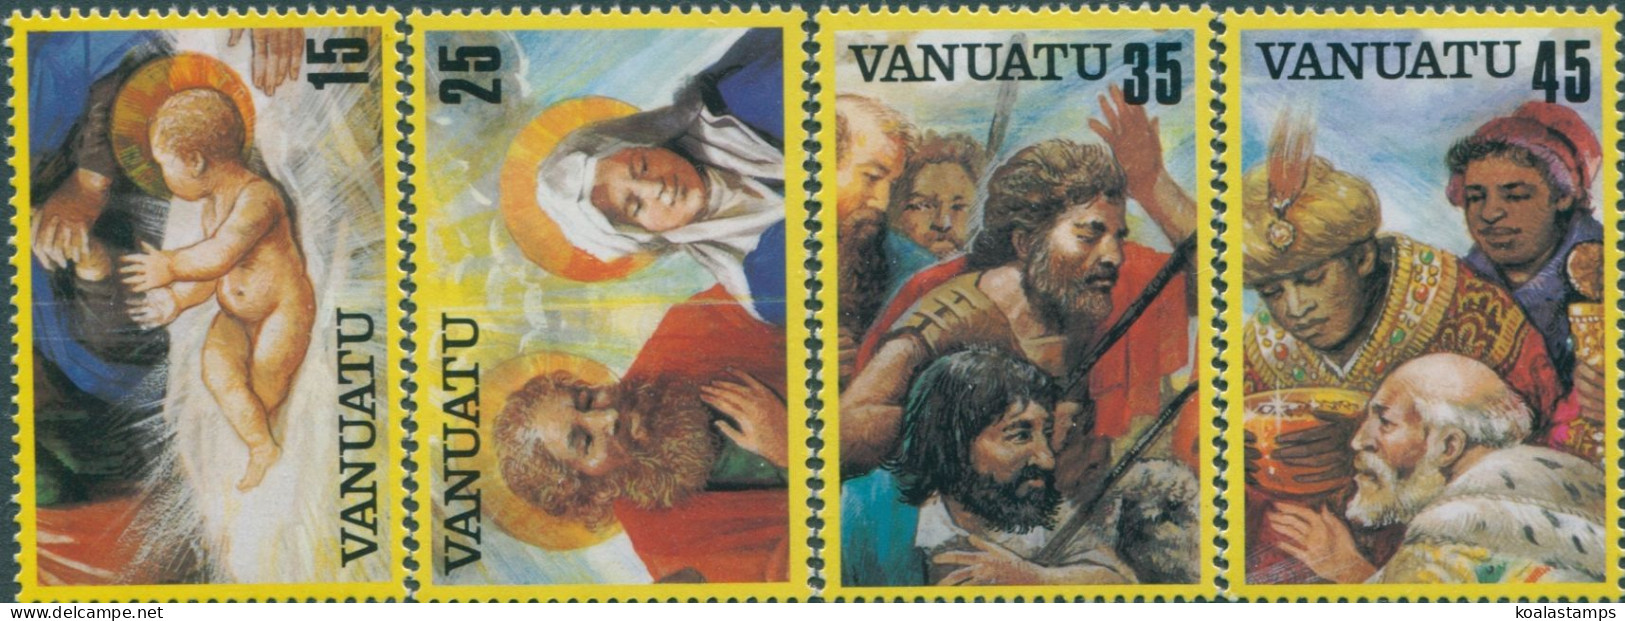 Vanuatu 1982 SG350-353 Christmas Set MNH - Vanuatu (1980-...)